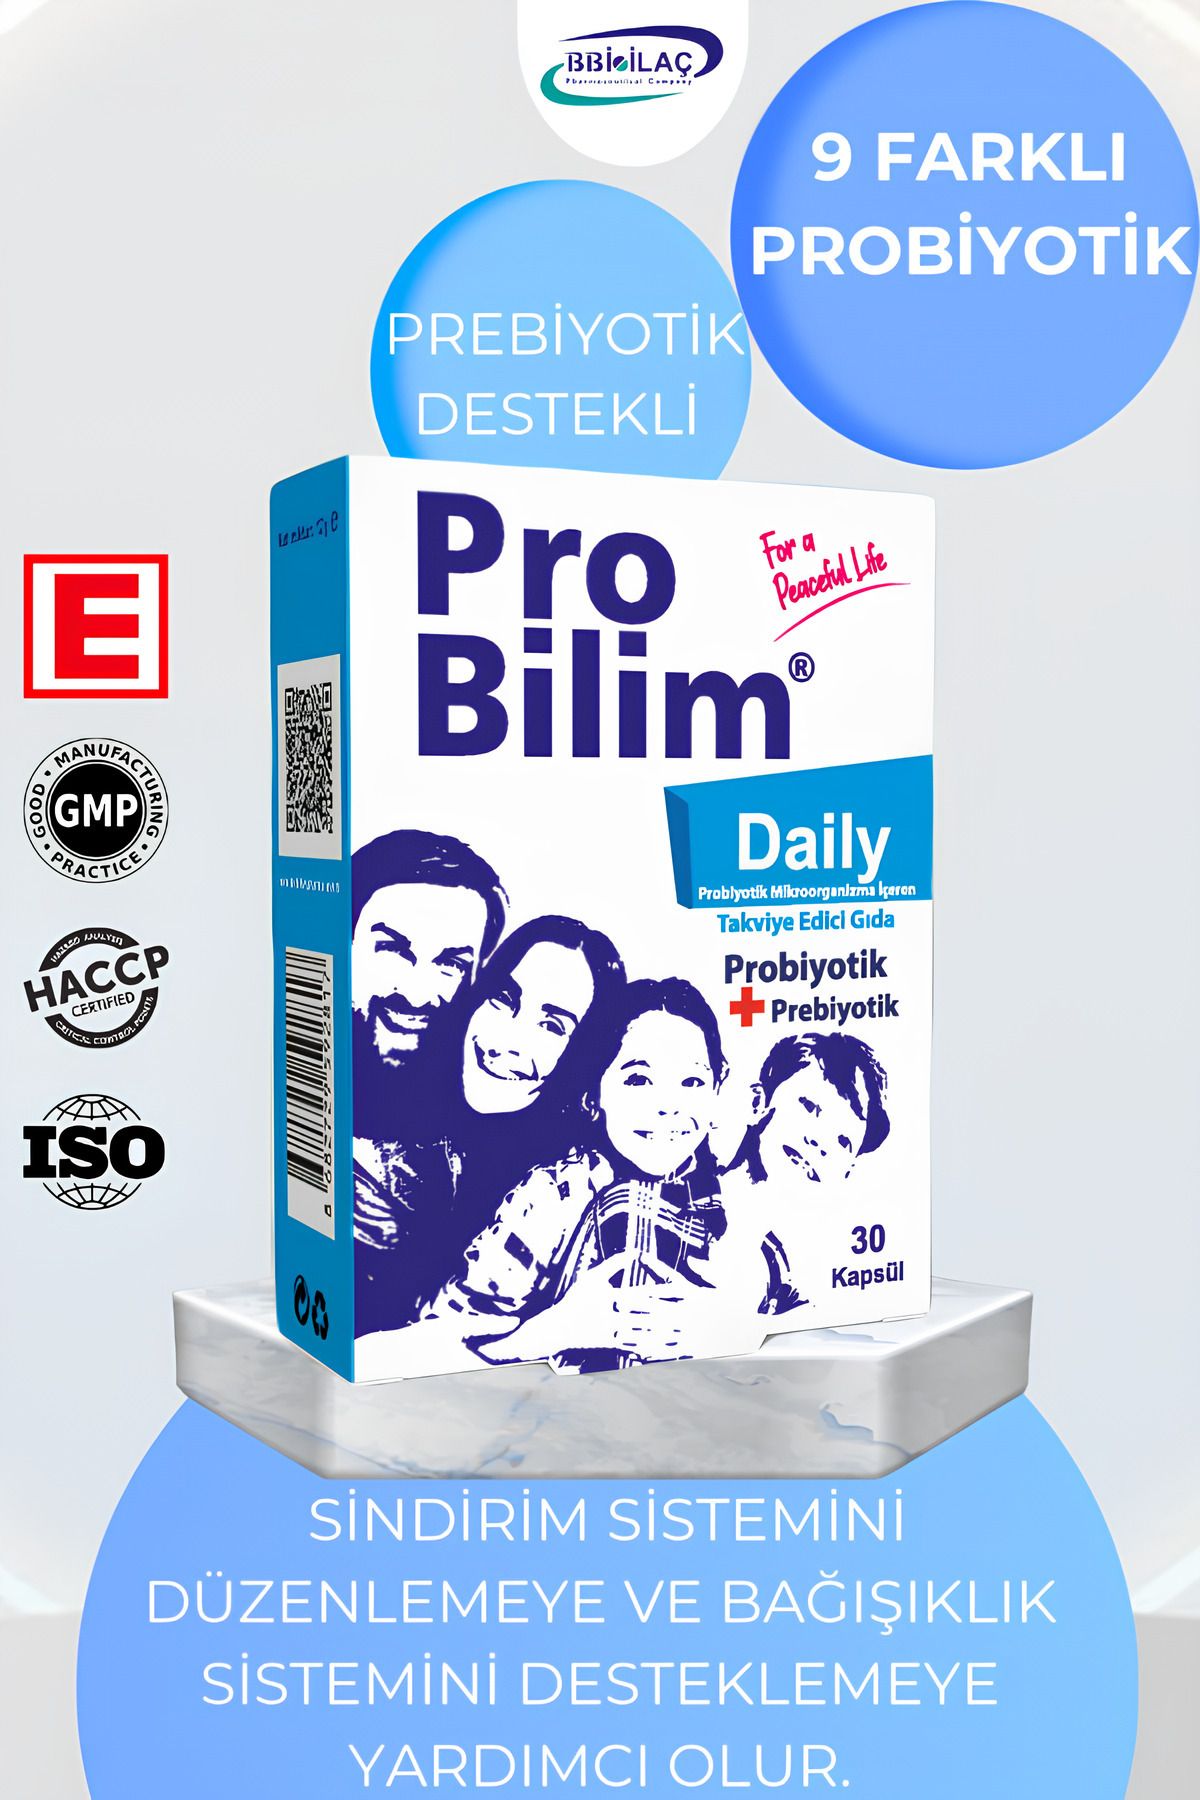 probilim ® Daily Probiyotik, Prebiyotik, 30 Kapsül , Günlük Probioyotik